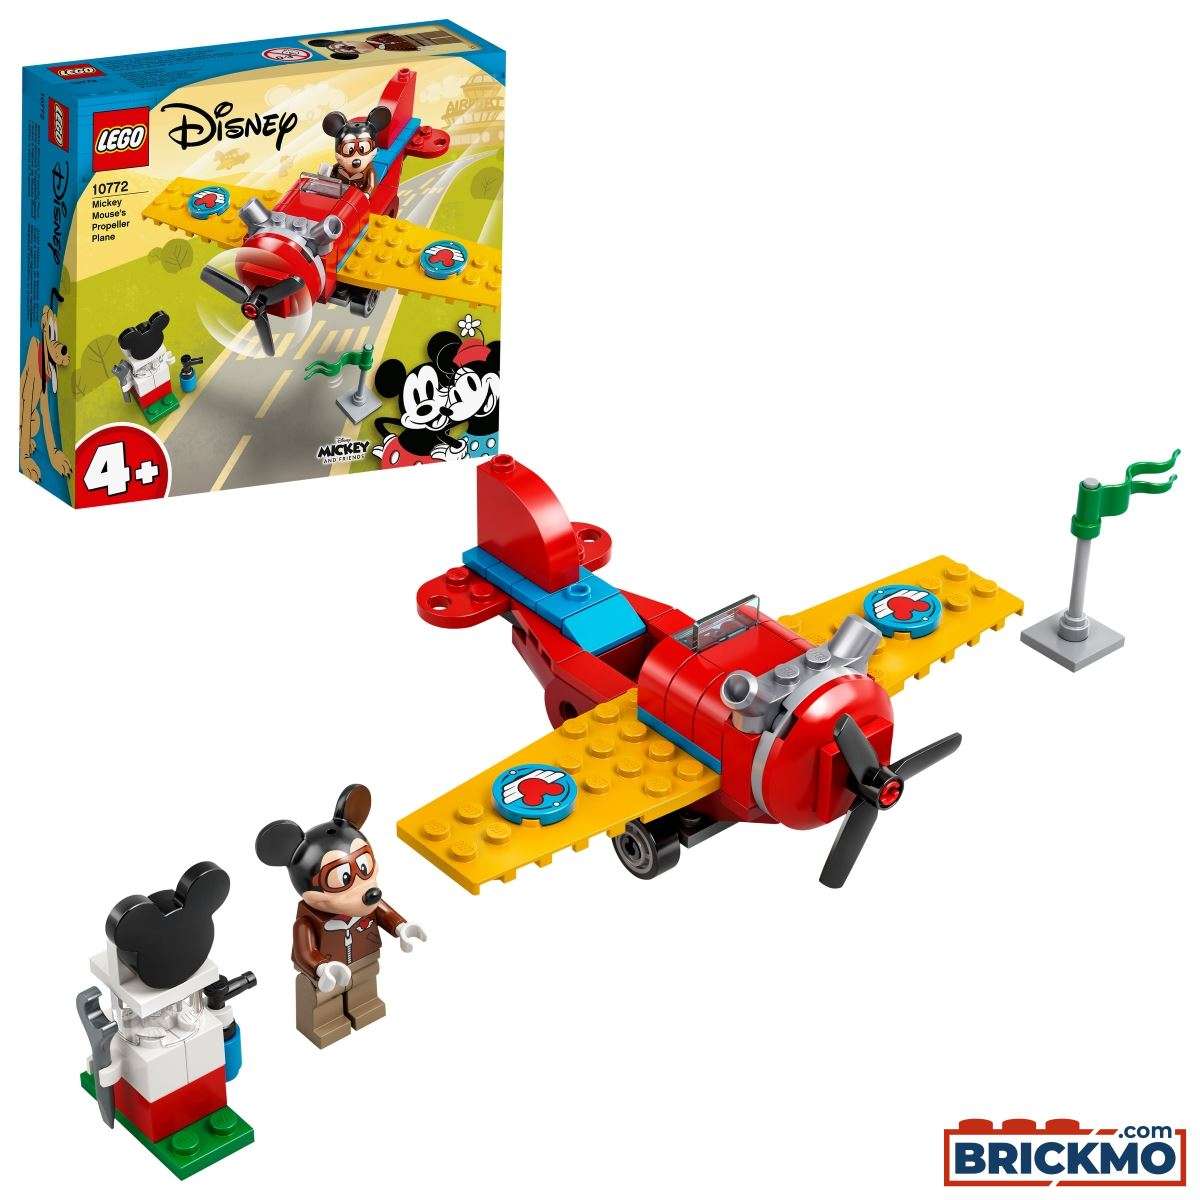 LEGO Disney 10772 Mickys Propellerflugzeug 10772